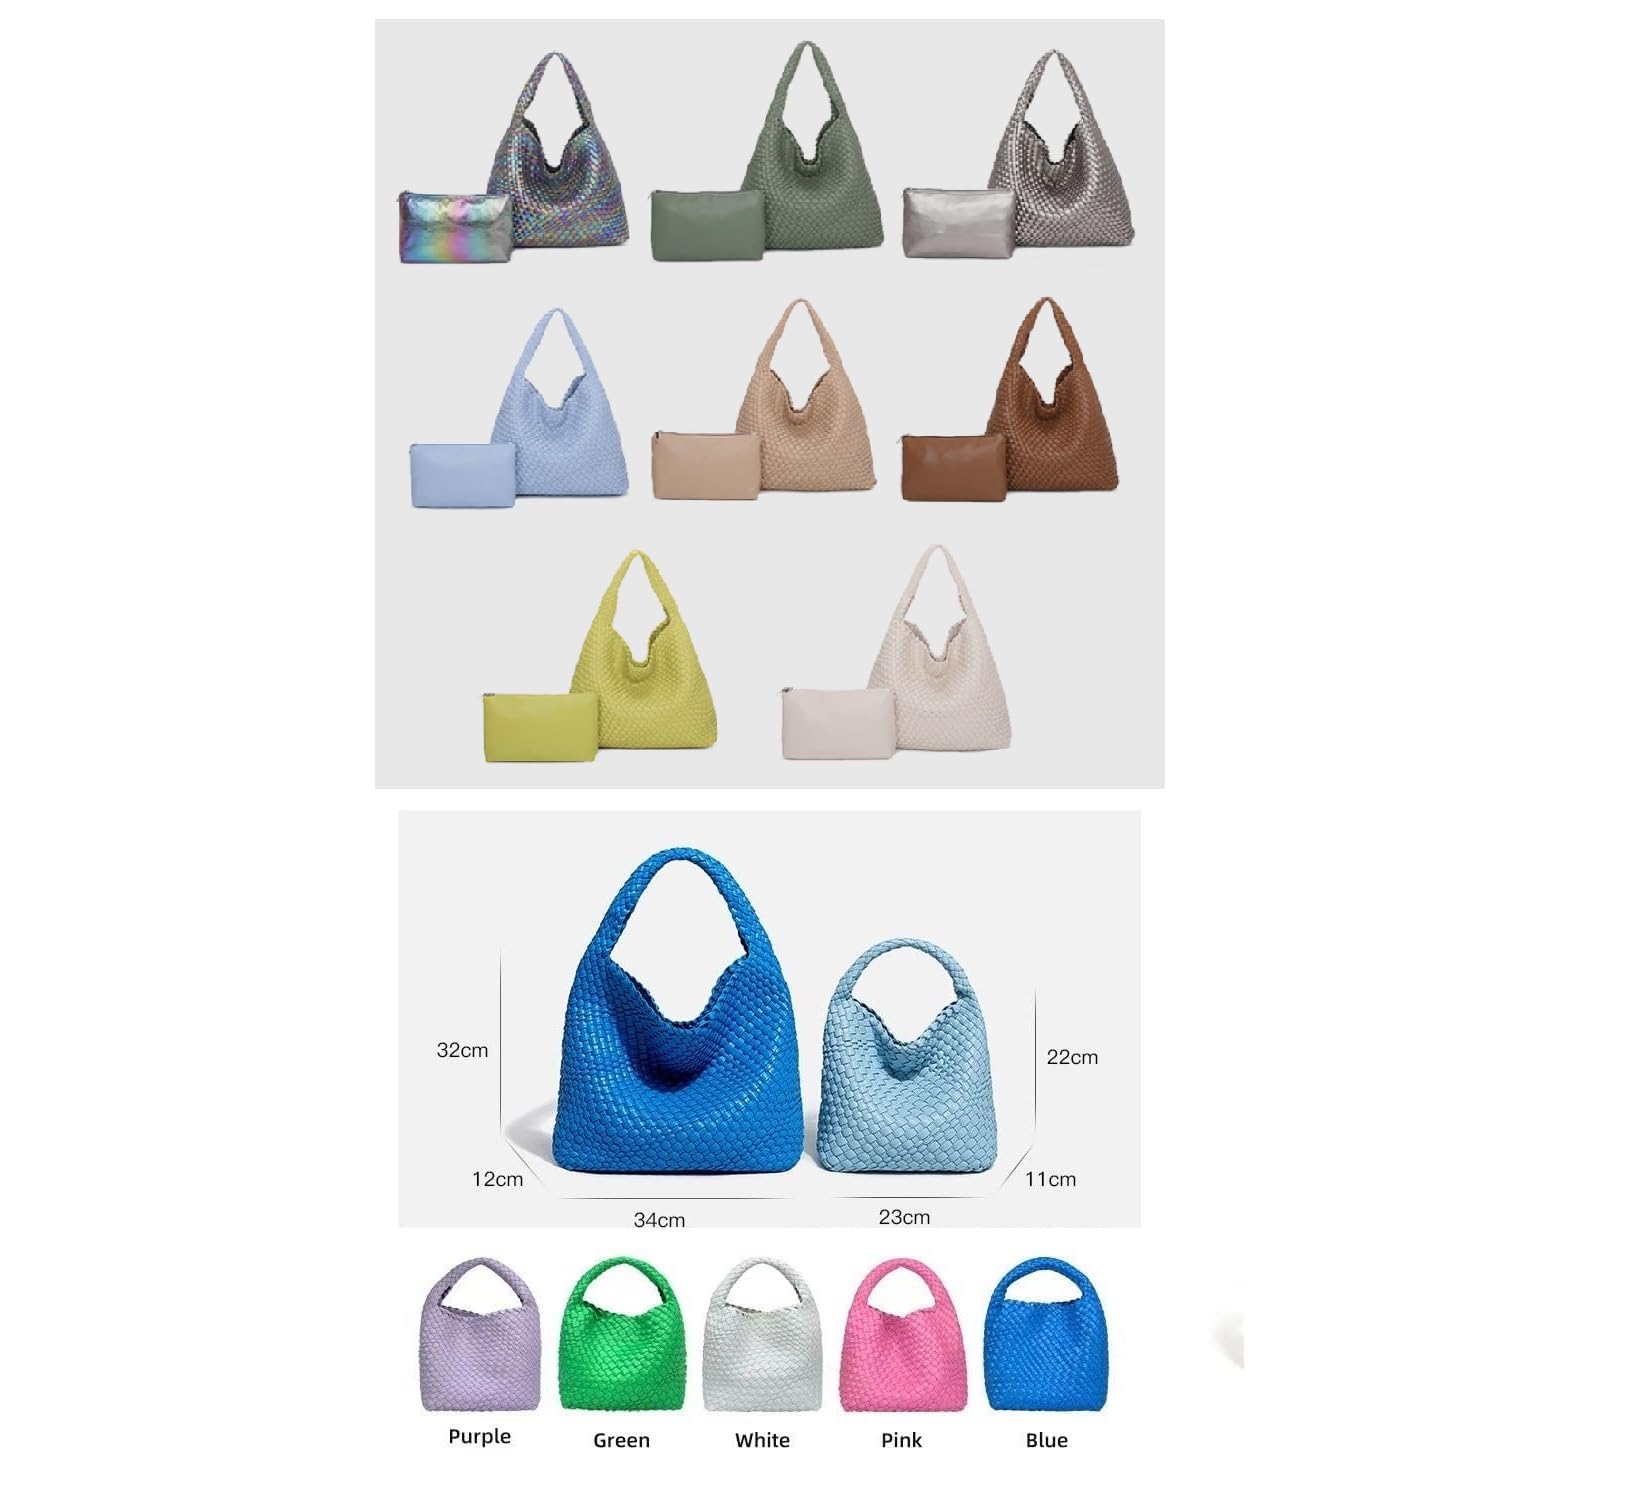 IMOOLY Women's Tote Bag, Luxury Handbag, Bucket Shape, Cube Shape, Shoulder Bag, Includes Pouch, Lightweight, Large Capacity, Various Colors, beige